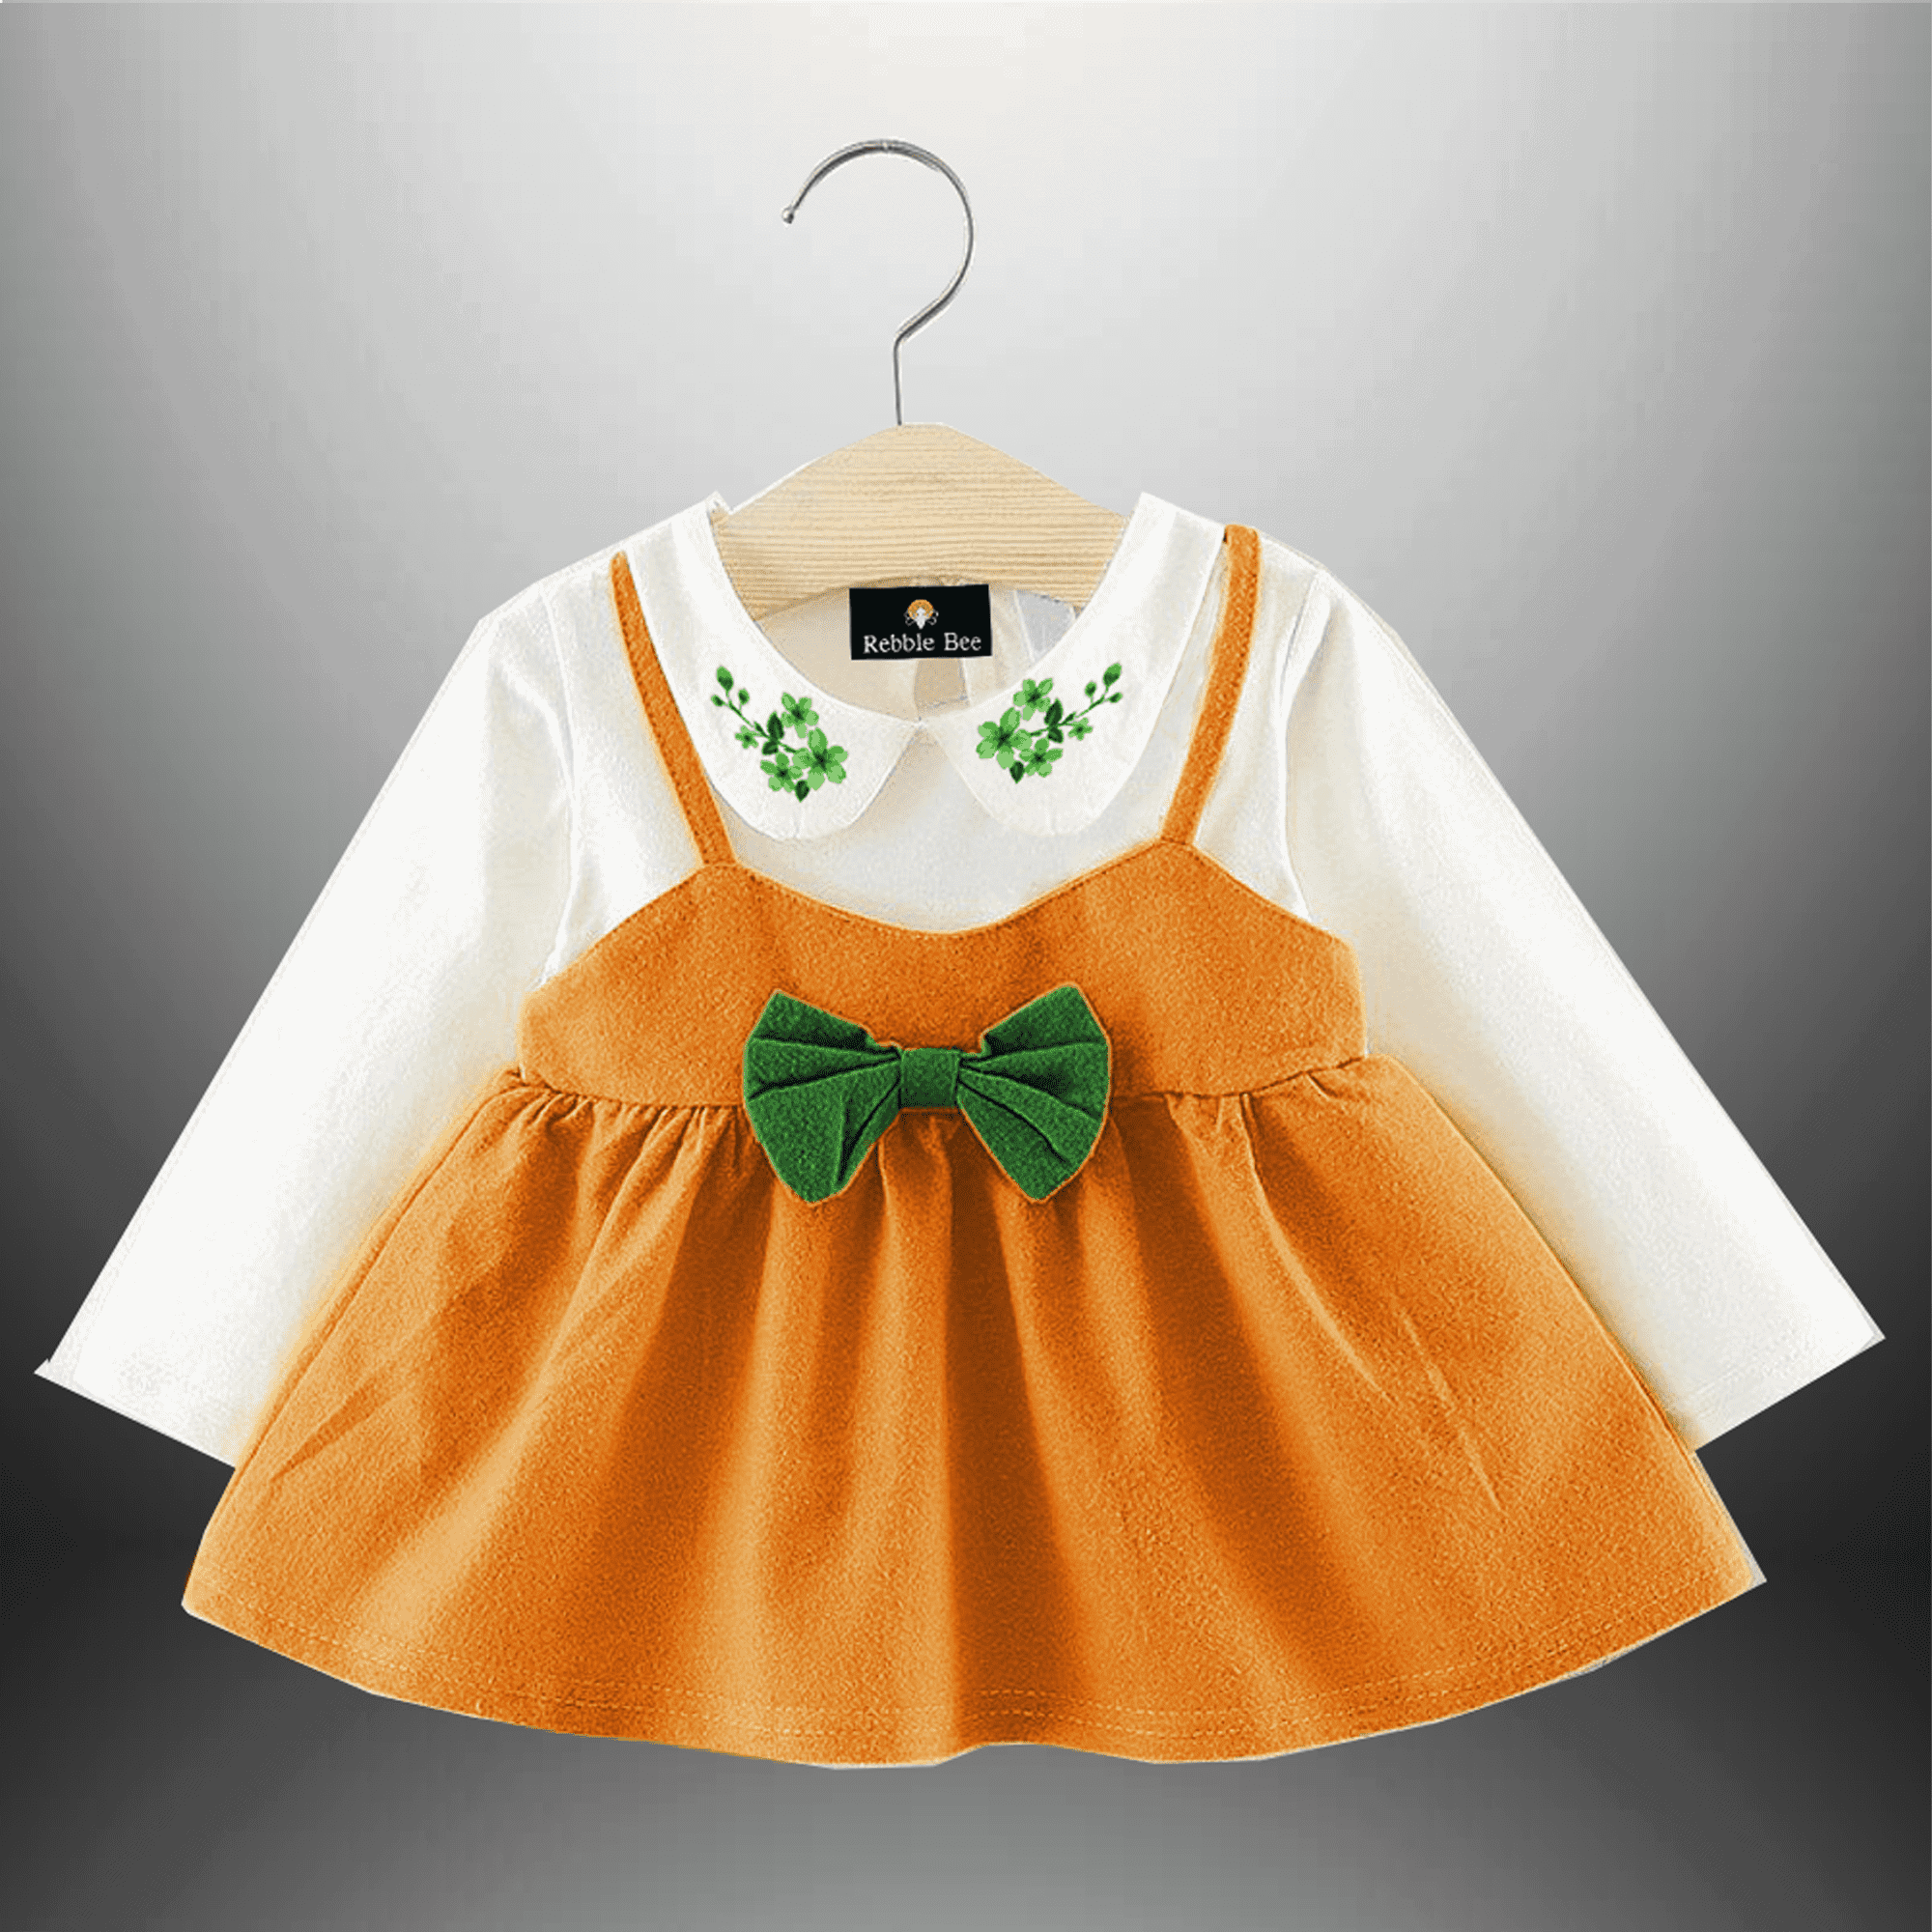 Girls 2pcs White Floral motif Top & Orange Pinafore Dress with a Cute Bow Set-RKFCW378